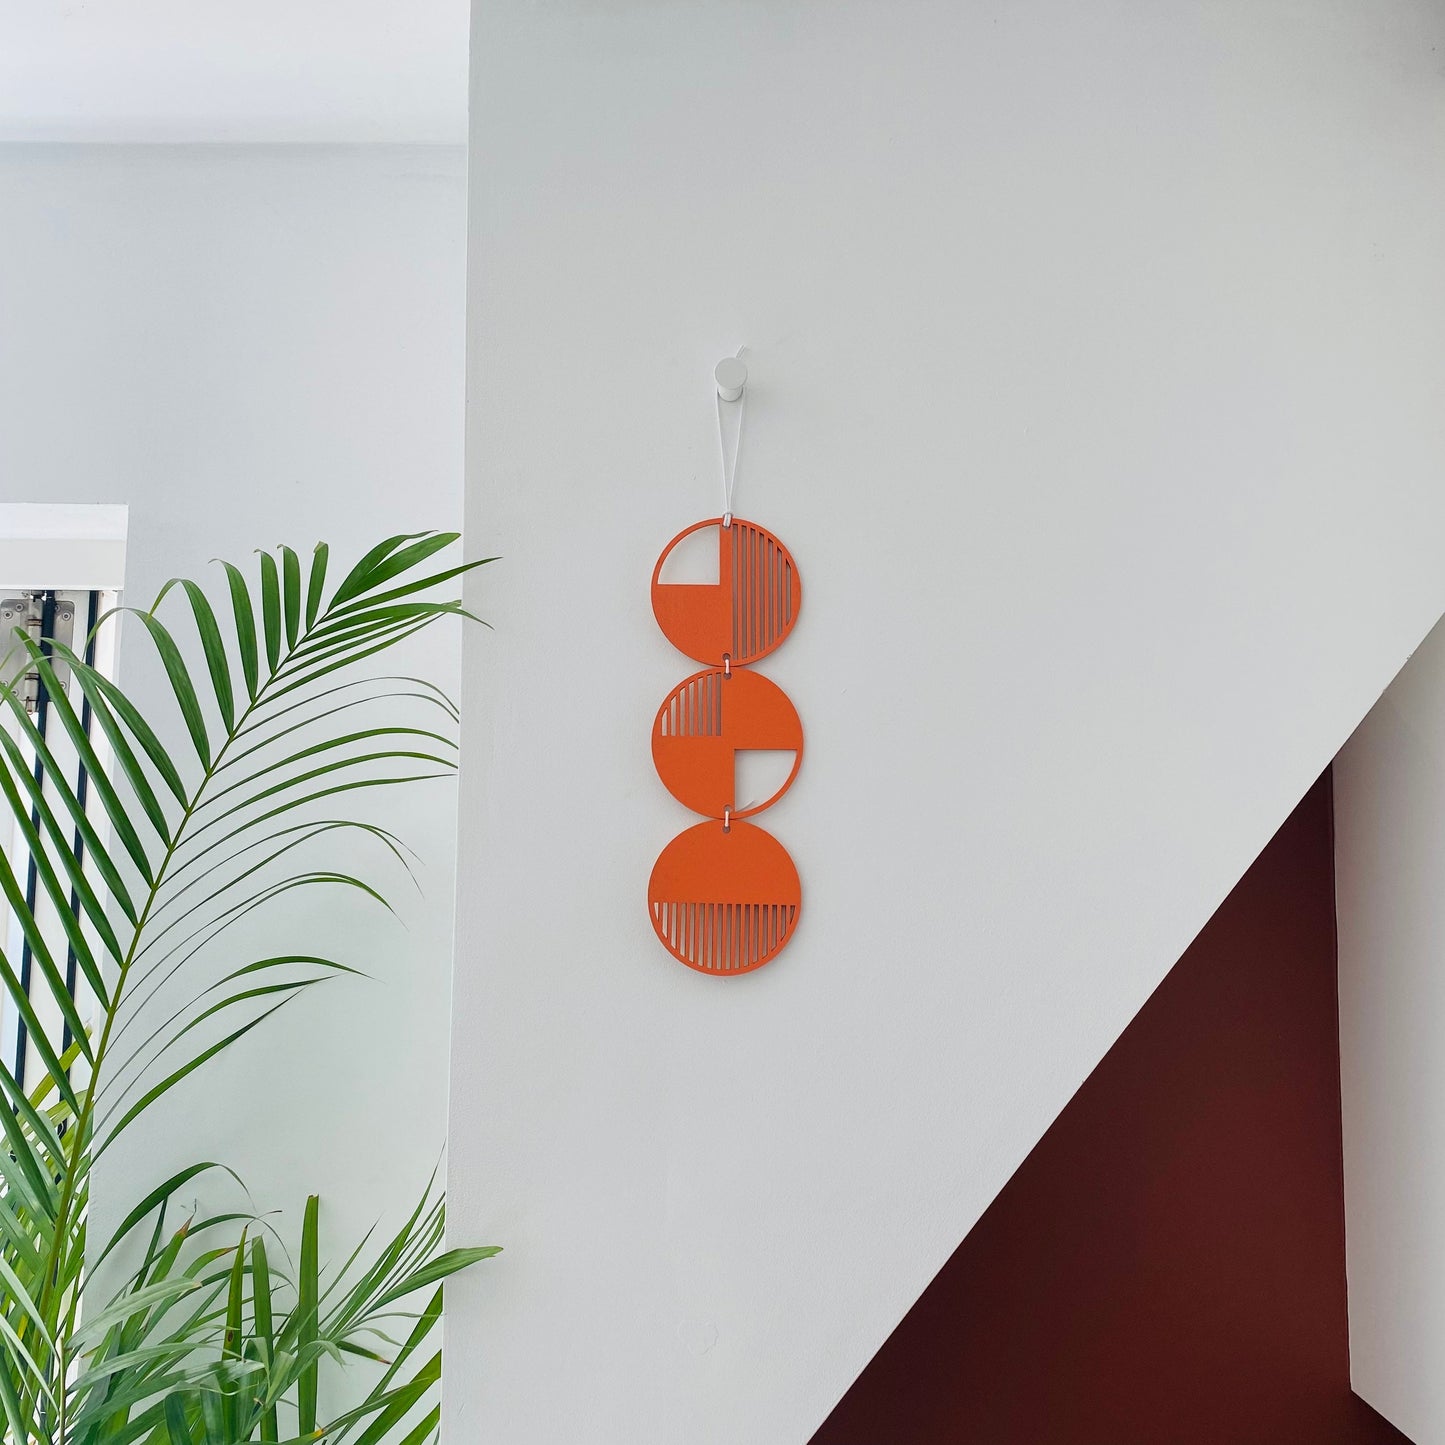 Orange Wall hanging - Geometric Art - Plywood Decor - Monochrome Art - Bright Wall Hanging - Wall Art Decor - Bright Cut Out Art